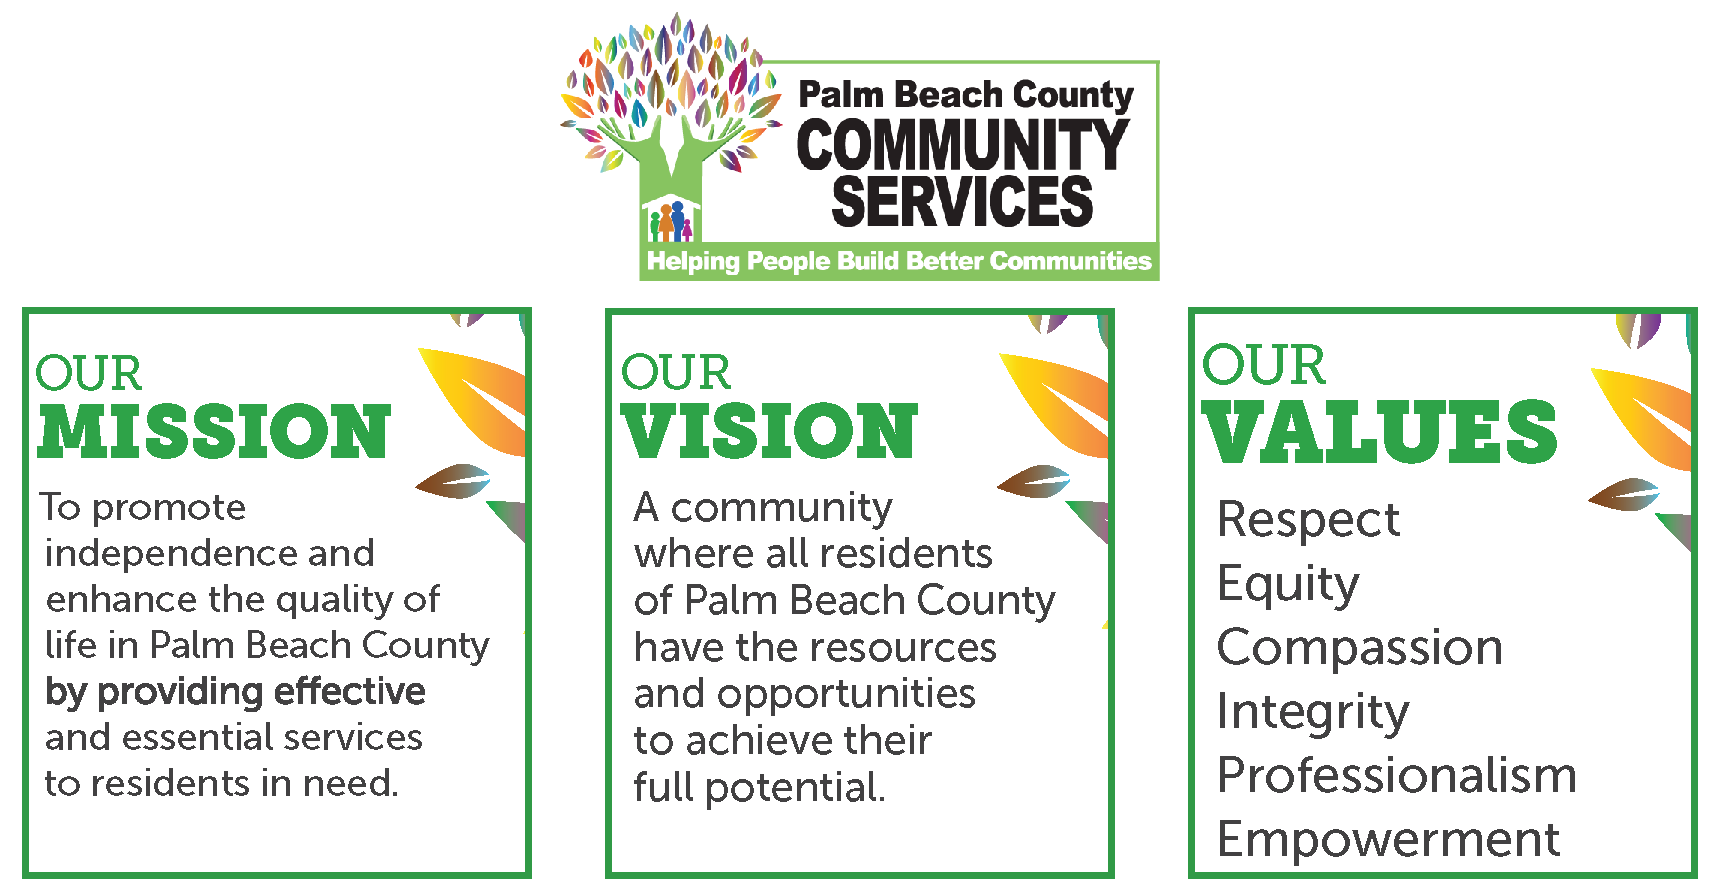 Community Services - Mission, Vision, Values